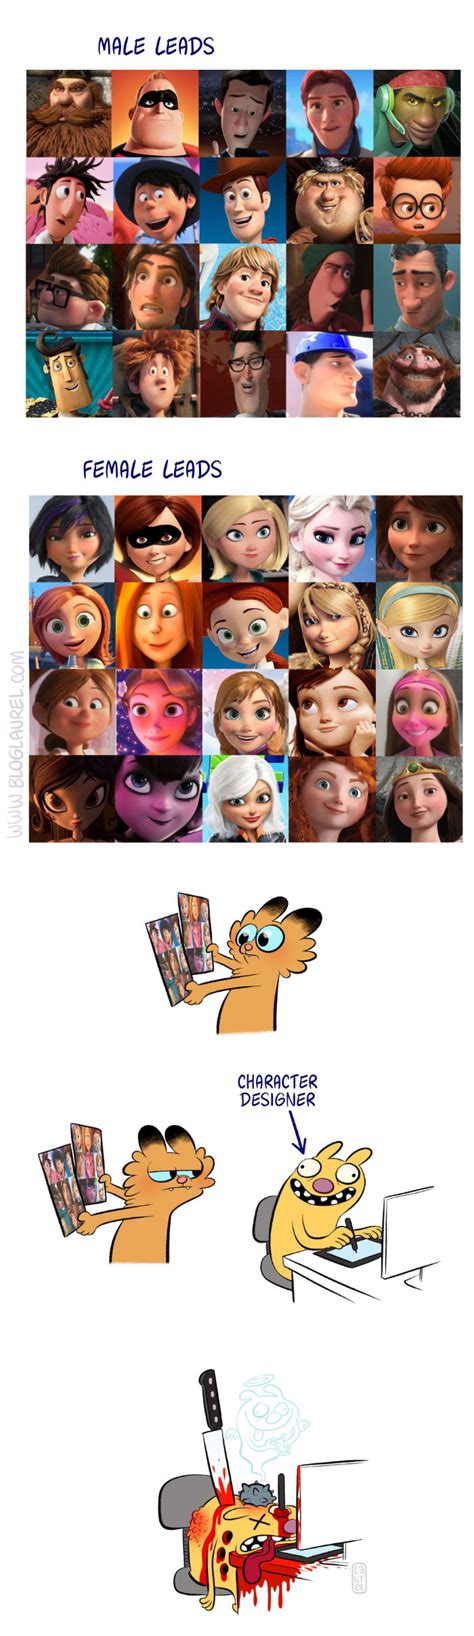 Disney Pixar Dreamworks Characters Female